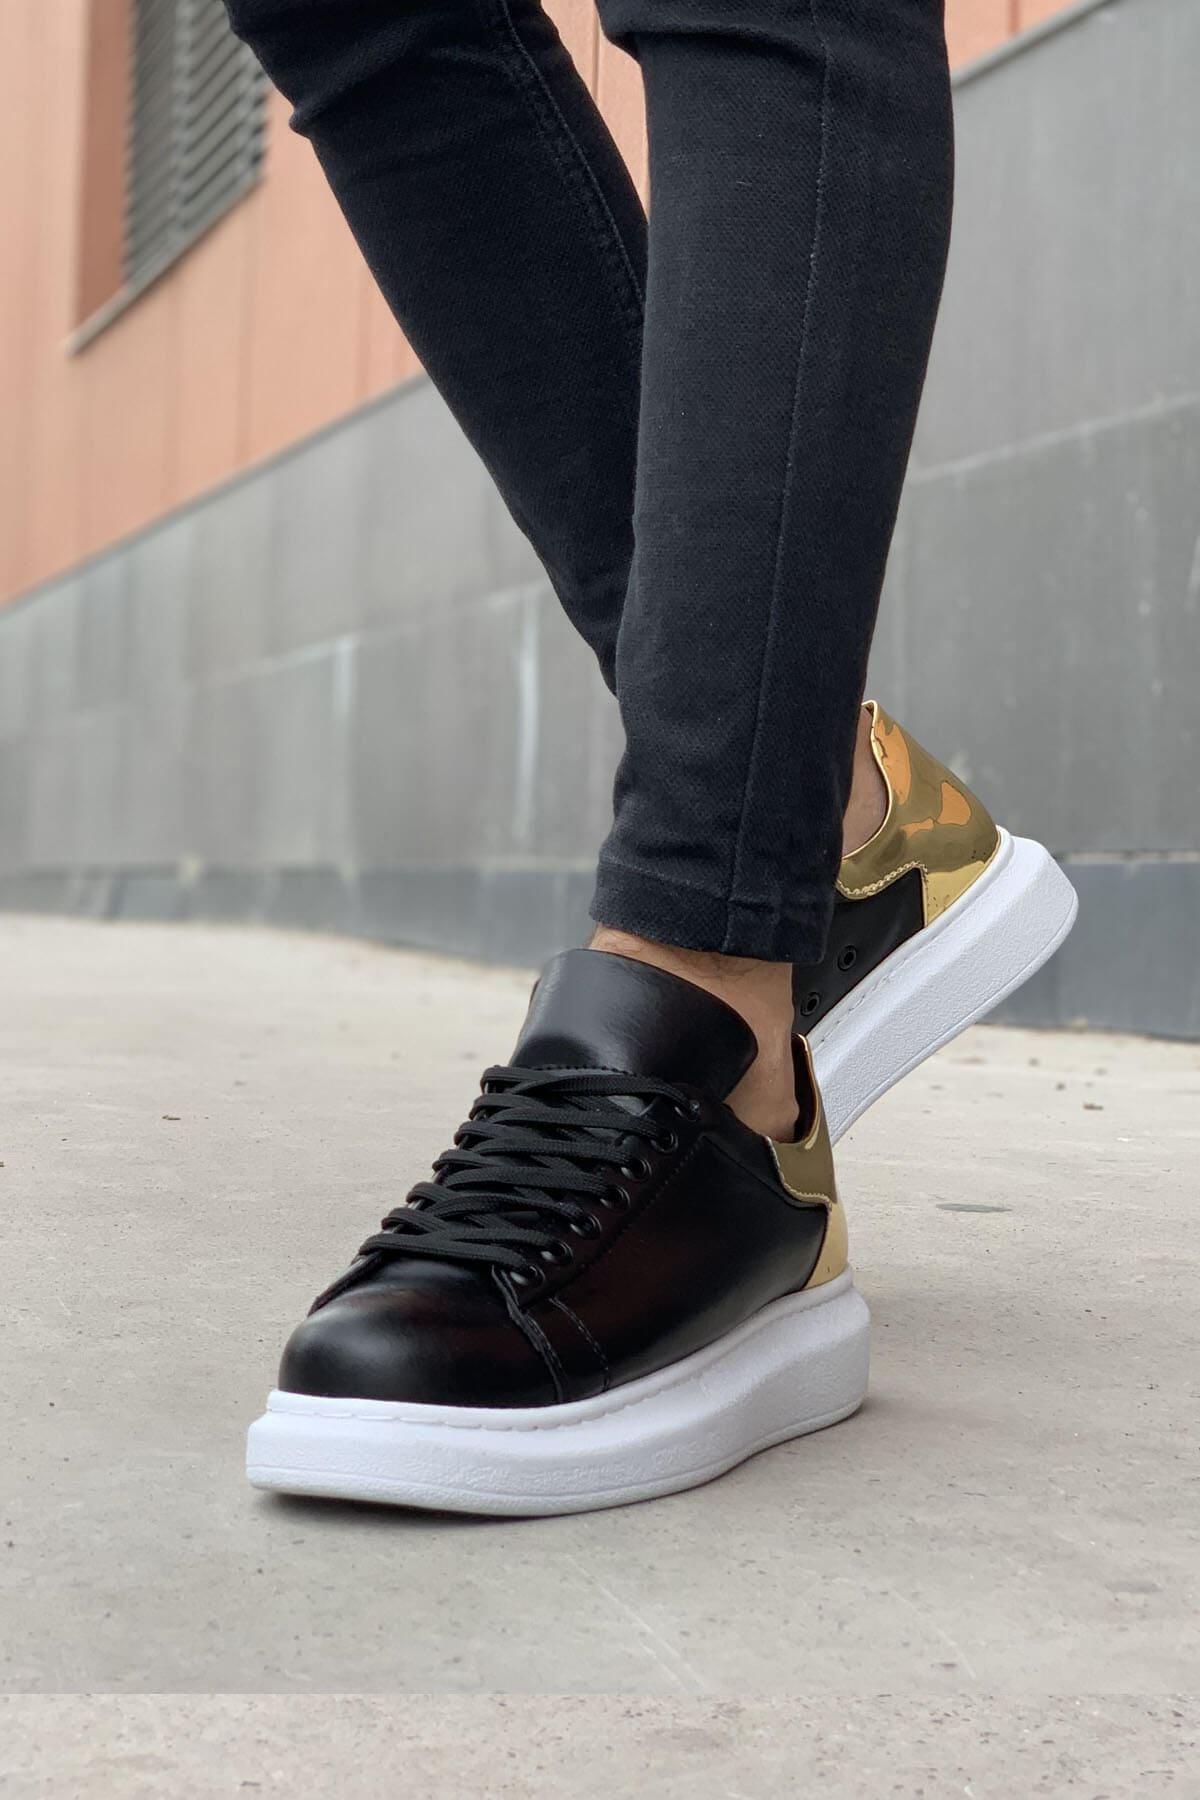 CH259 BT Black / Gold Men's Sneakers Shoes - STREET MODE ™